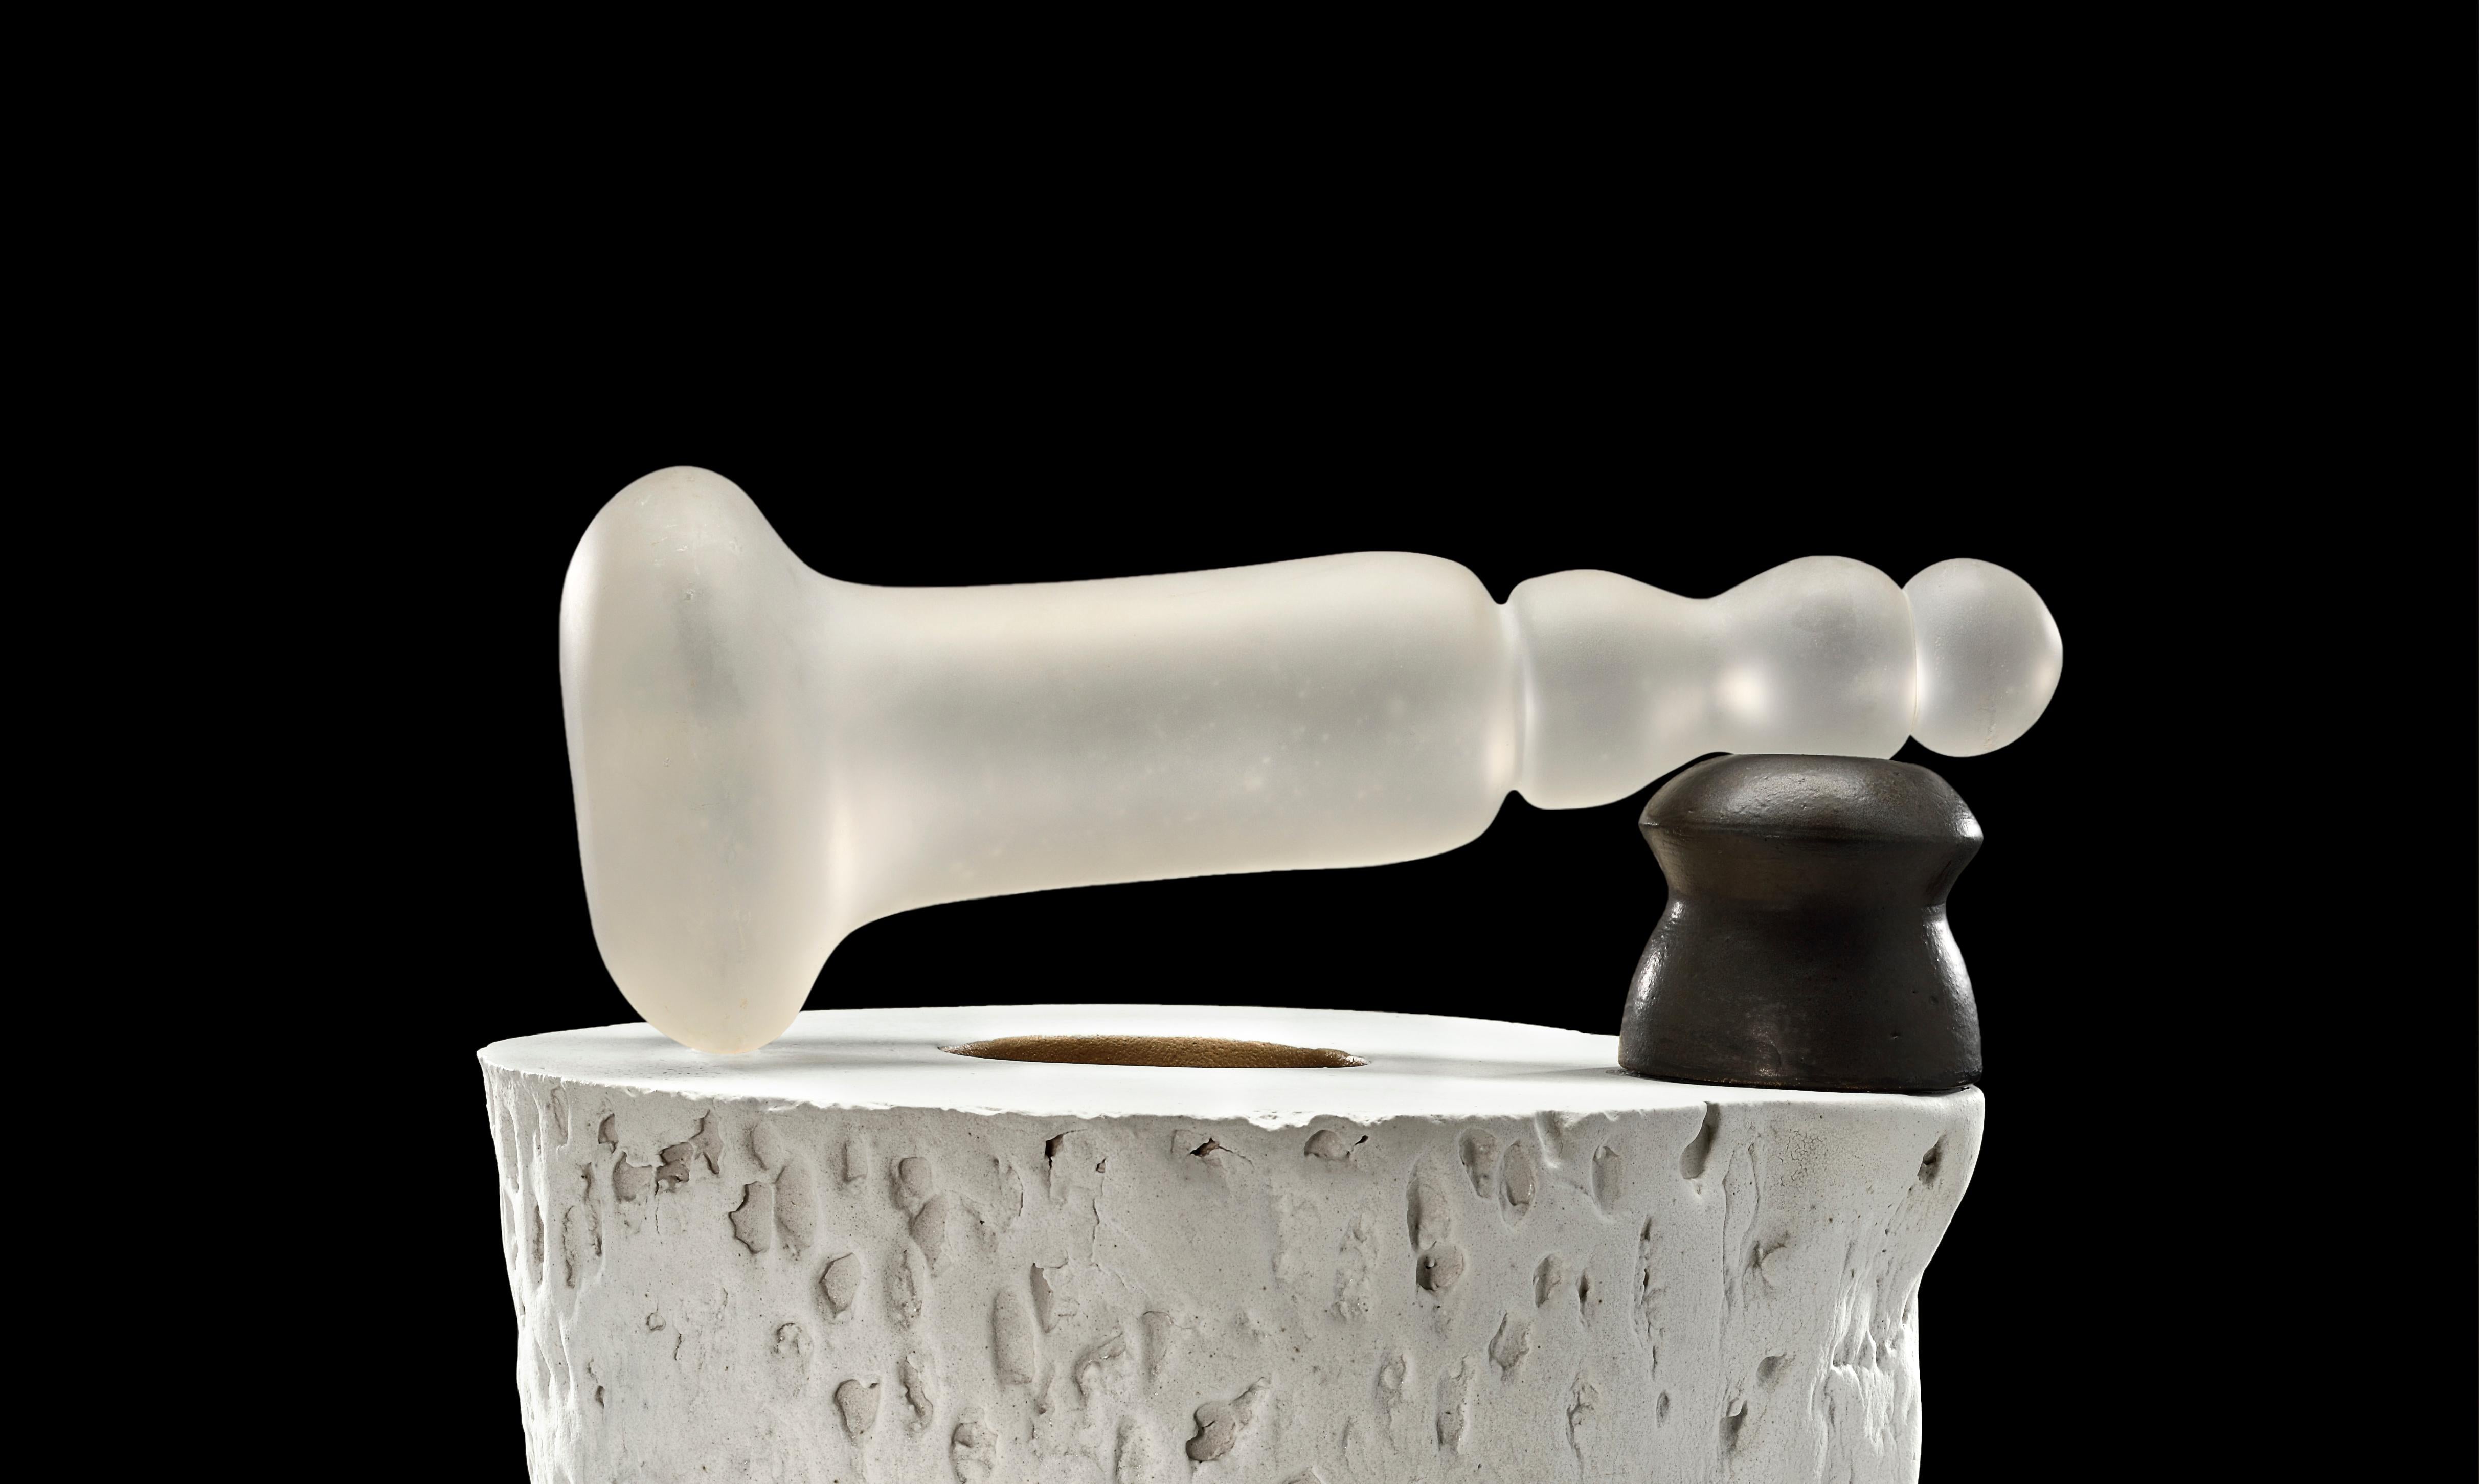 Modern Richard Hirsch Ceramic Mortar and Glass Pestle Sculpture #4, 2020 For Sale